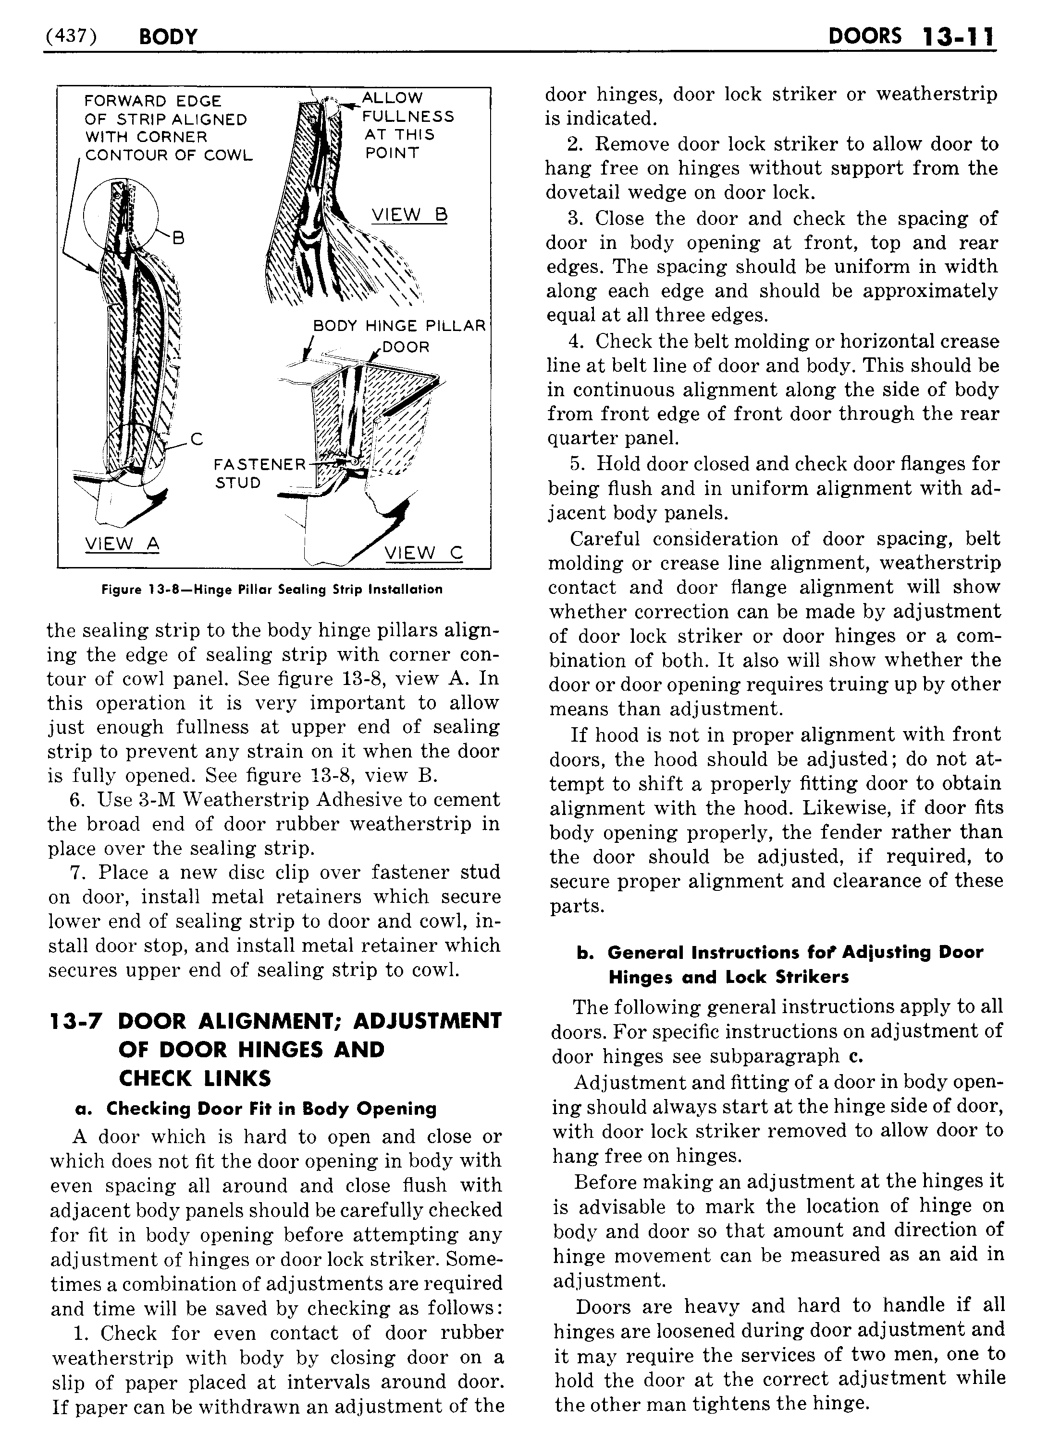 n_14 1951 Buick Shop Manual - Body-011-011.jpg